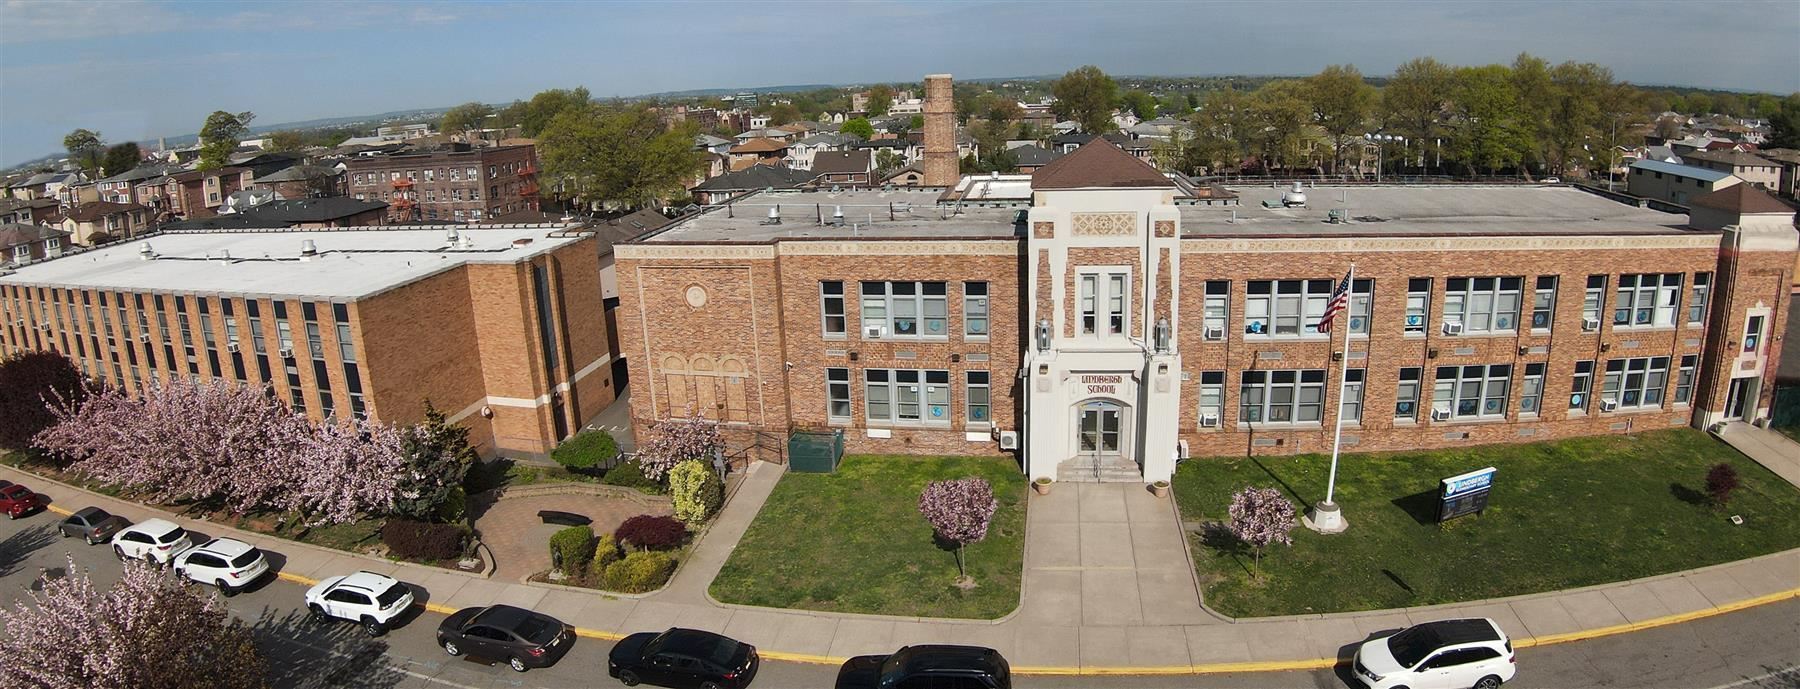 Lindbergh Elementary School